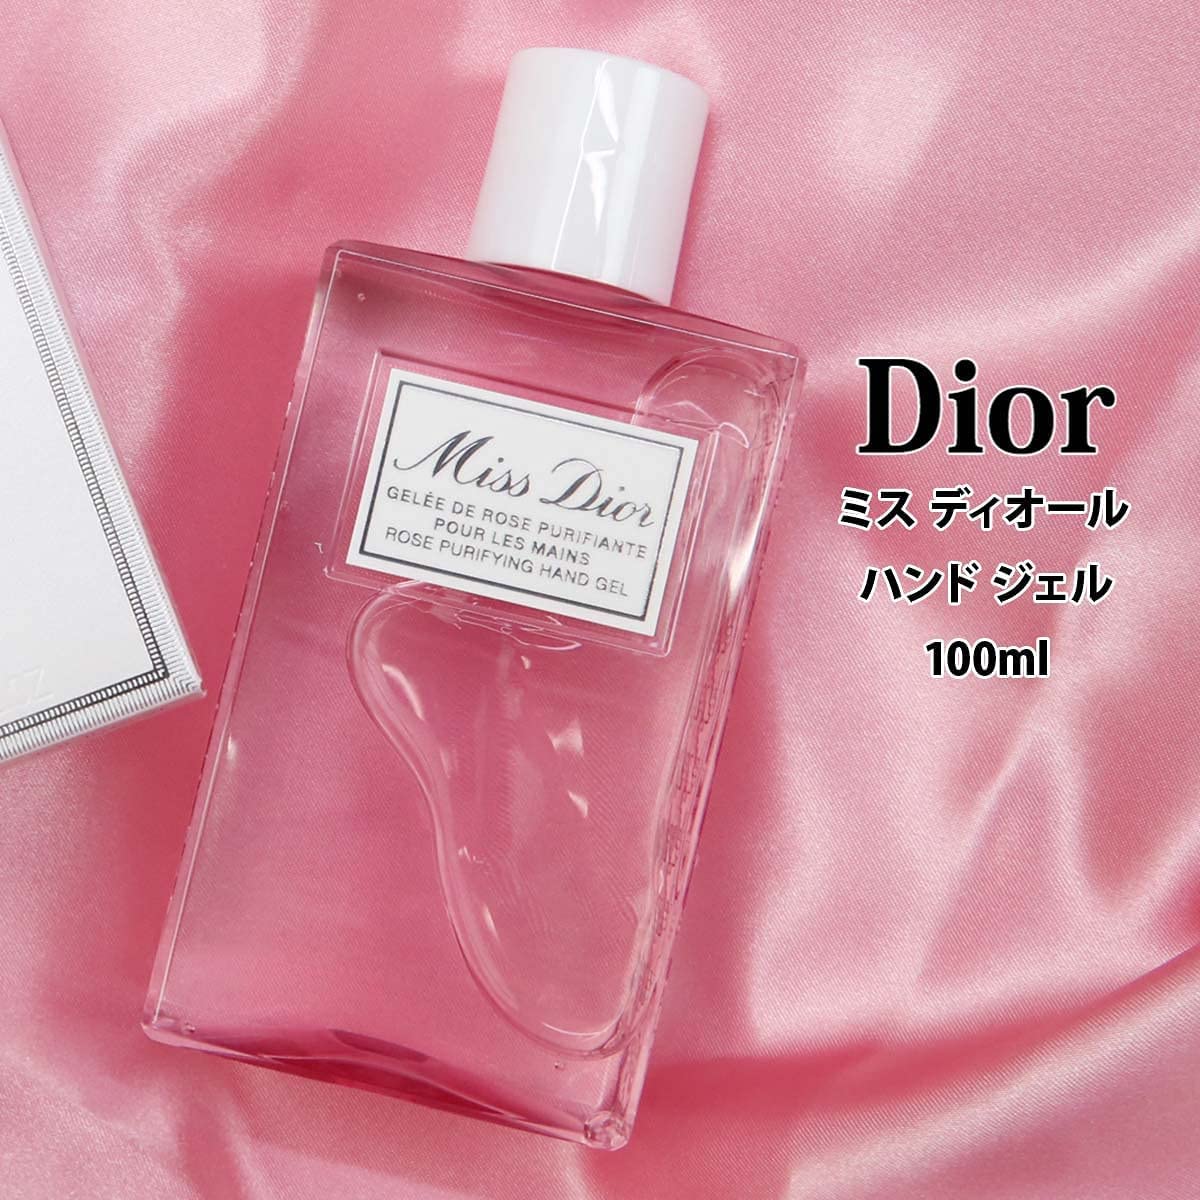 Dior Miss Dior  Shower Gel  Makeupuk